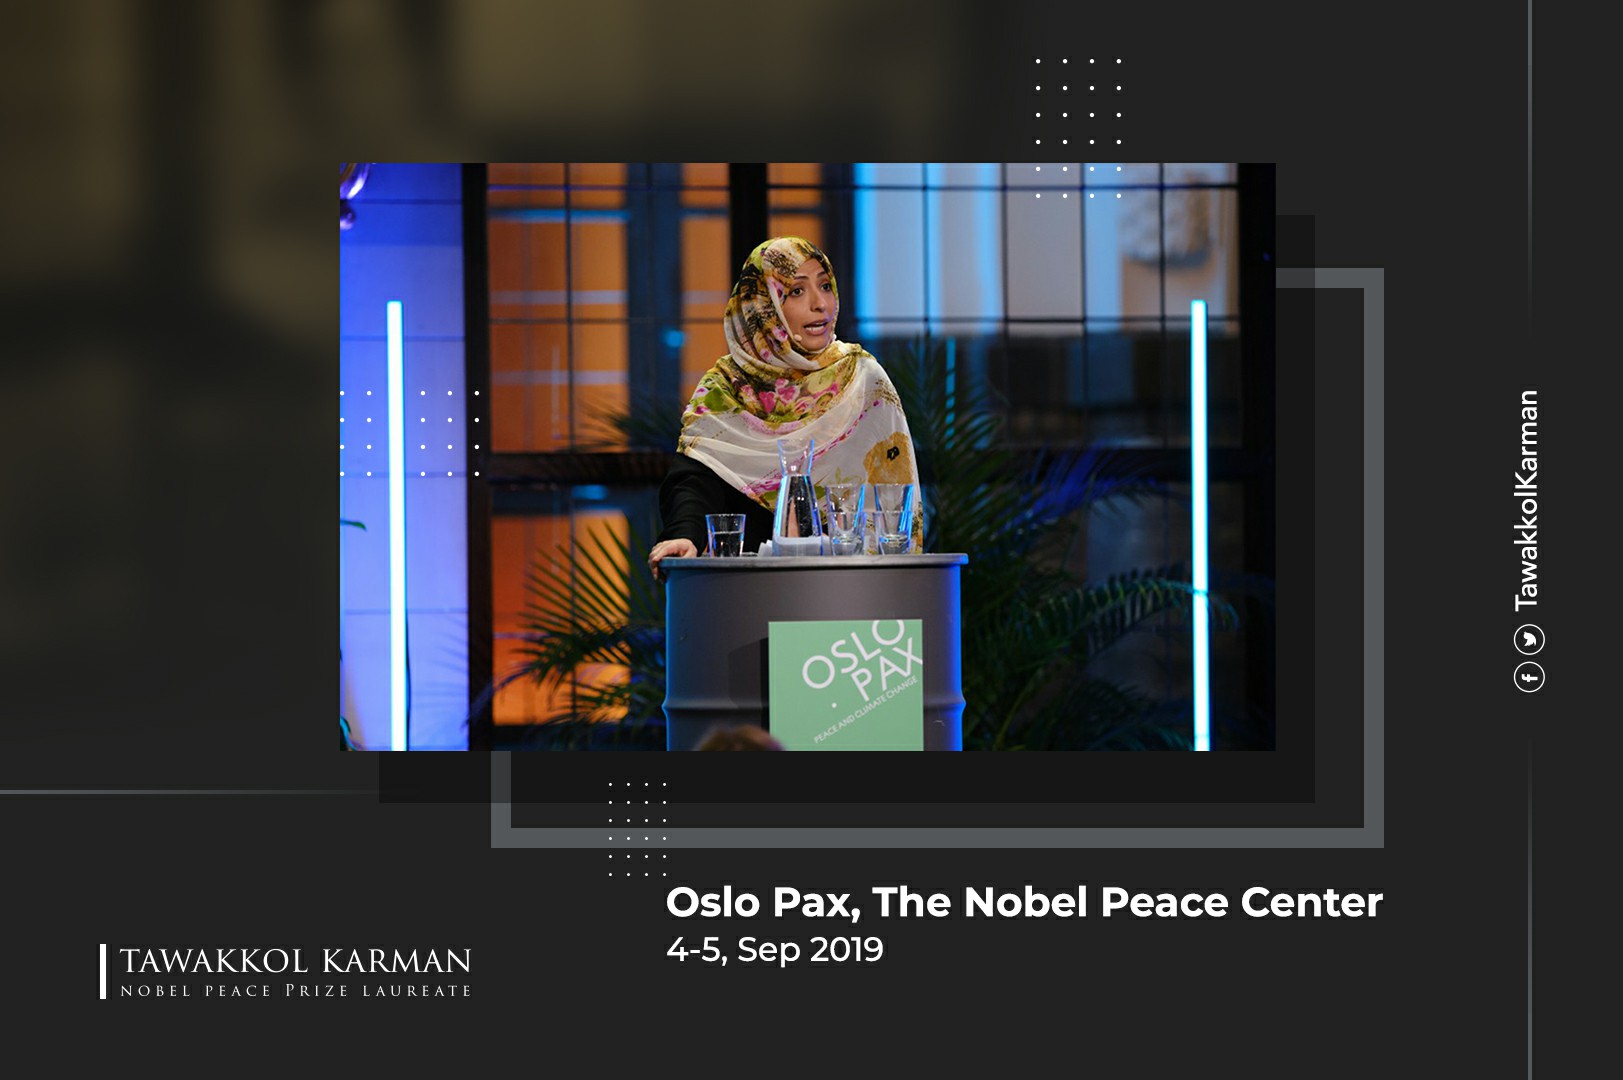 Participation of Tawakkol Karman in Nobel Peace Center - Oslo Pax